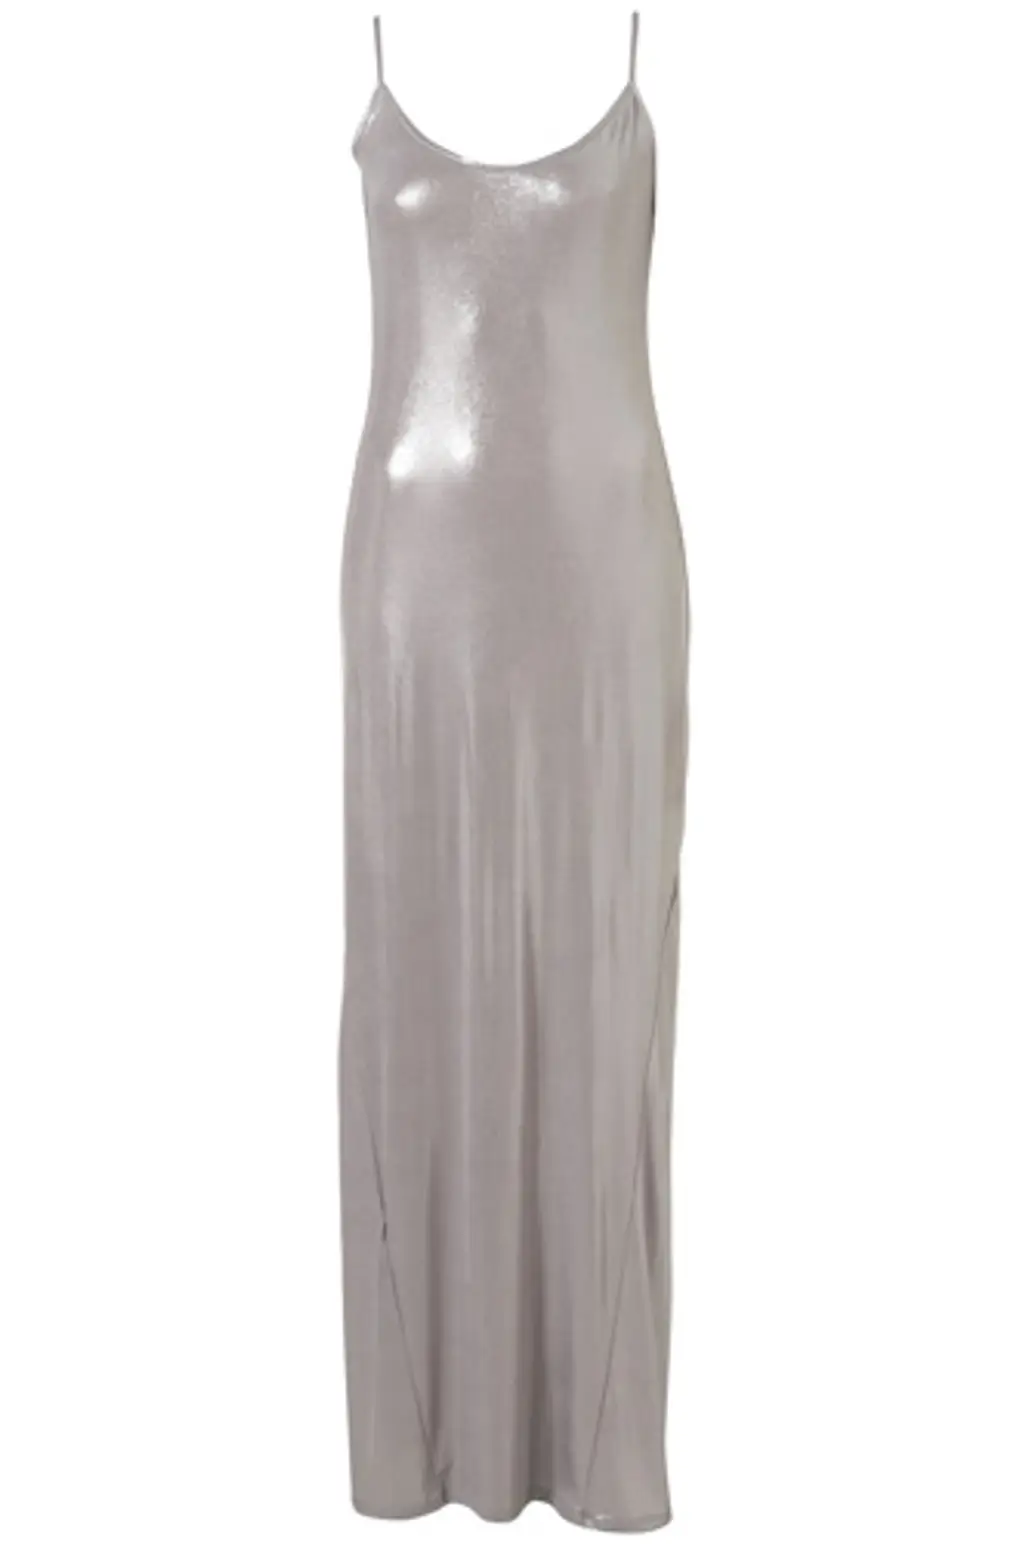 Topshop Silver Strappy Maxi Dress